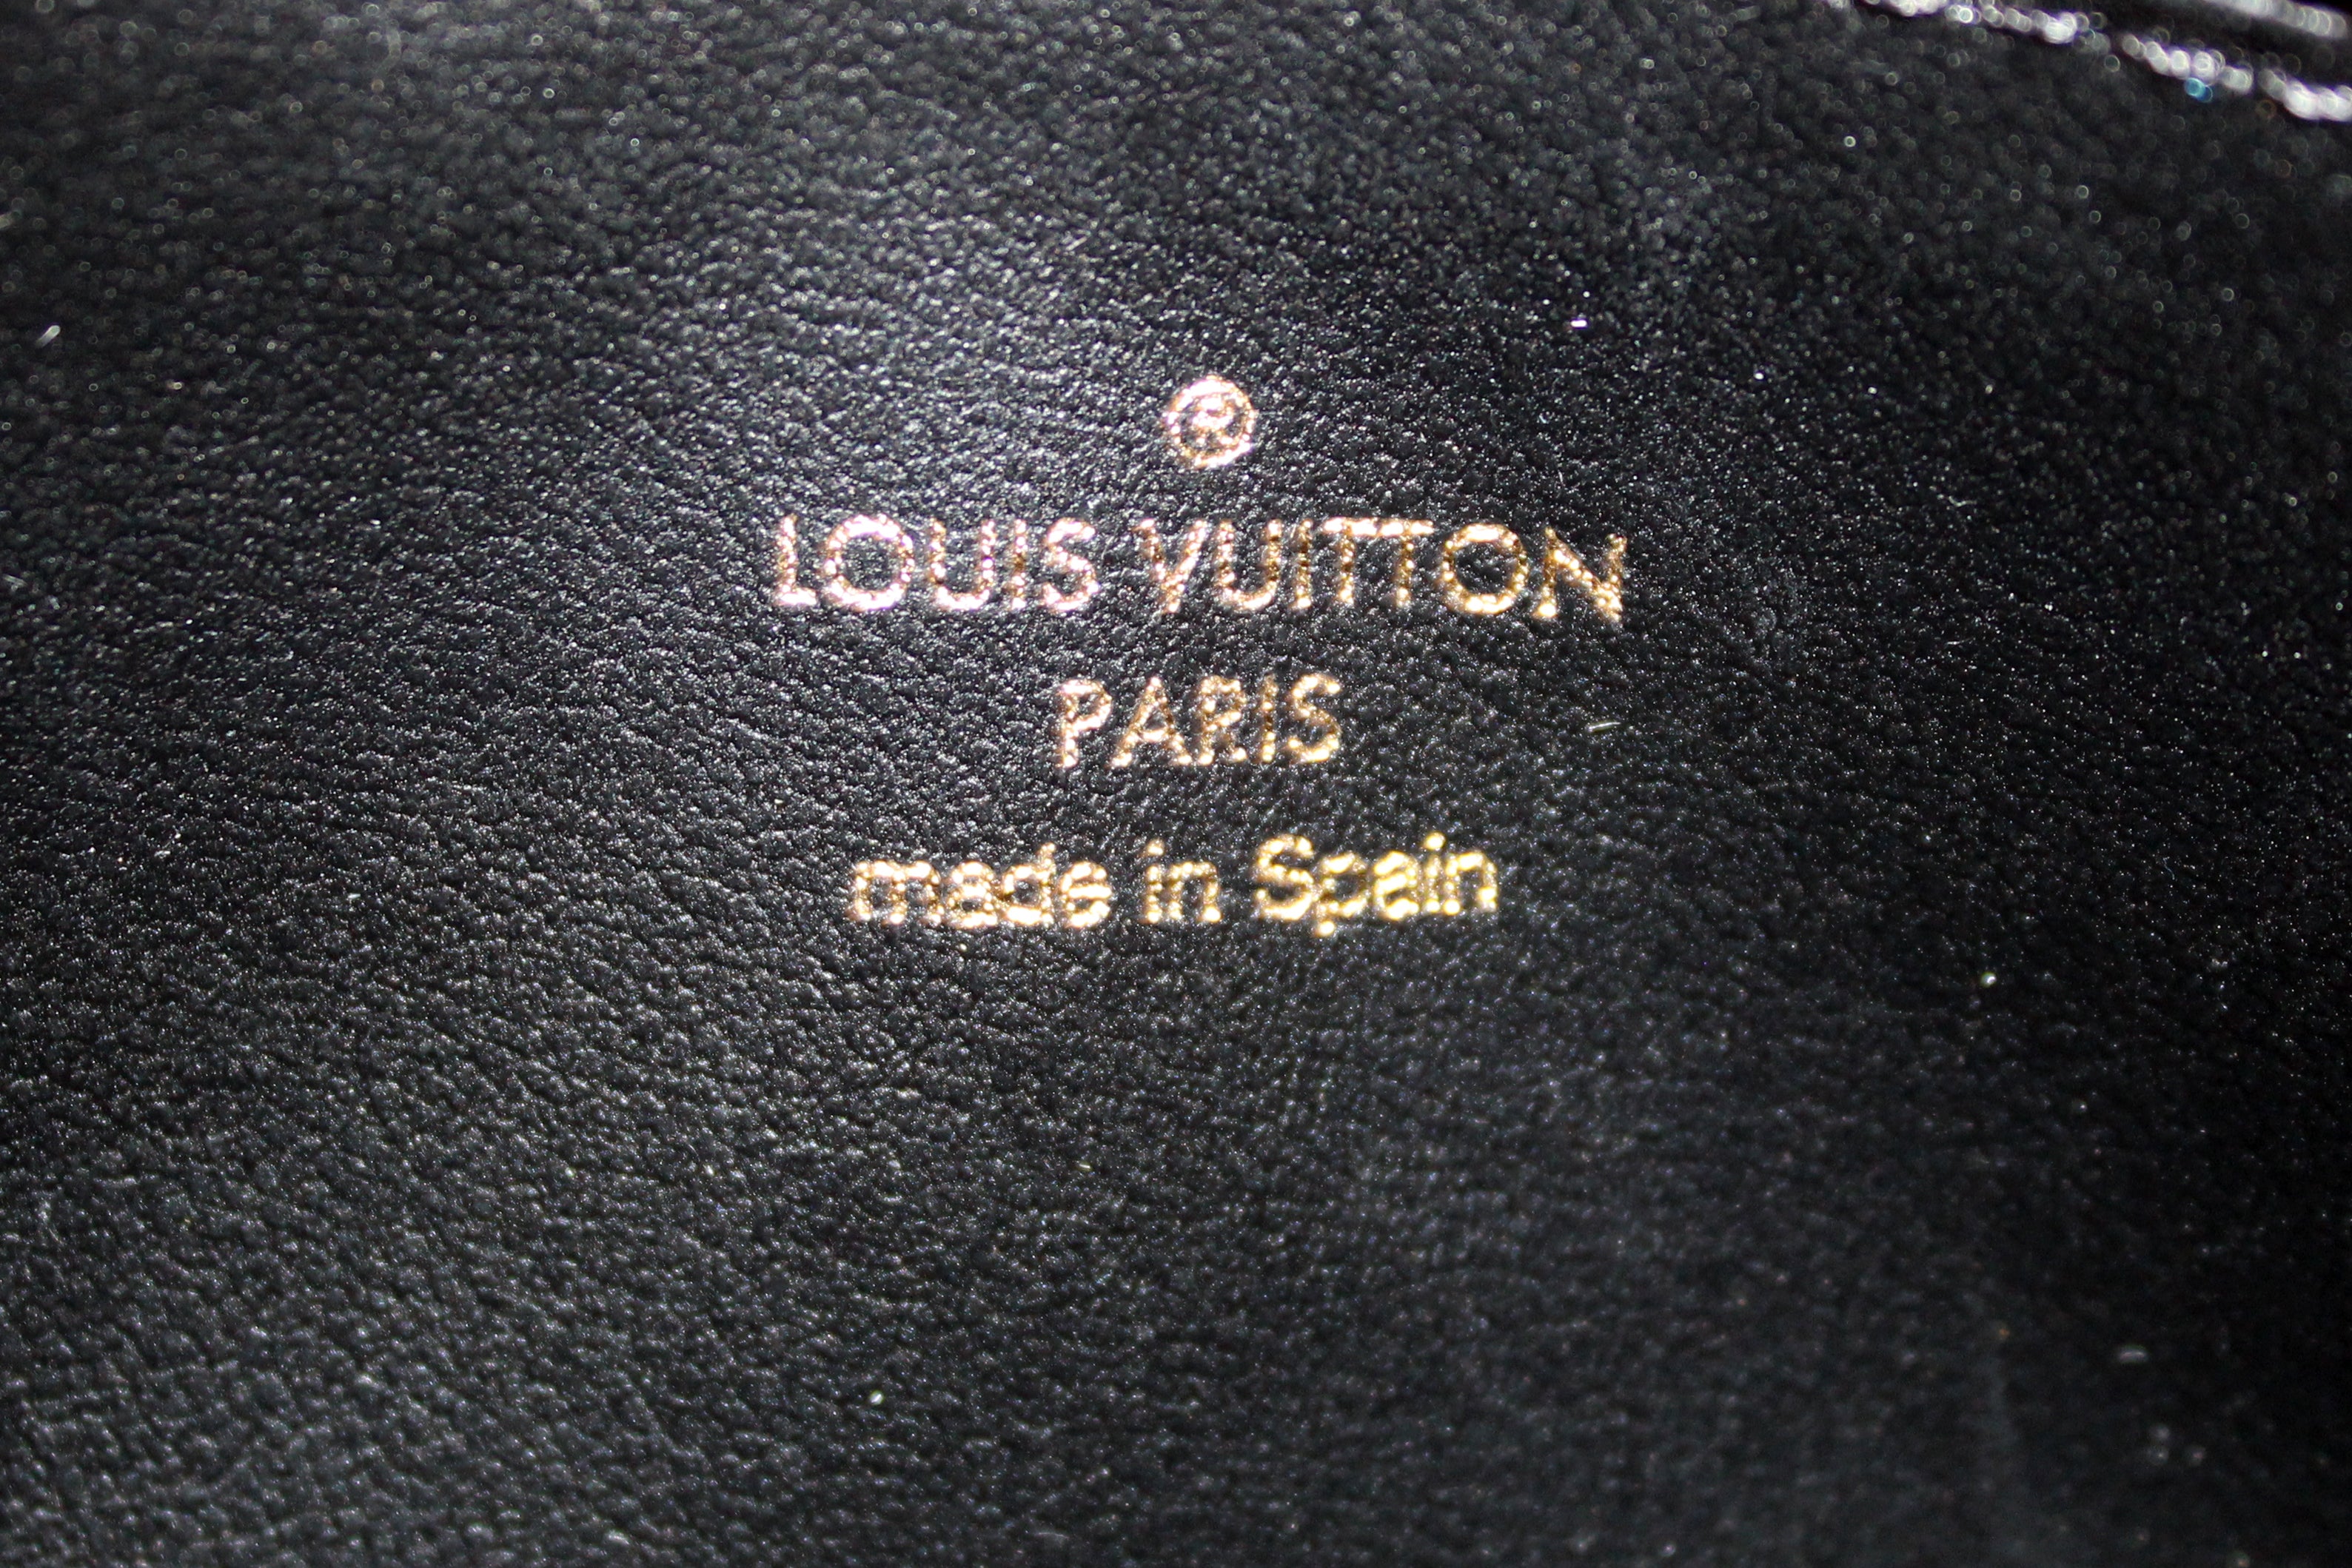 Authentic Louis Vuitton Josephine Wallet in Monogram #0240552